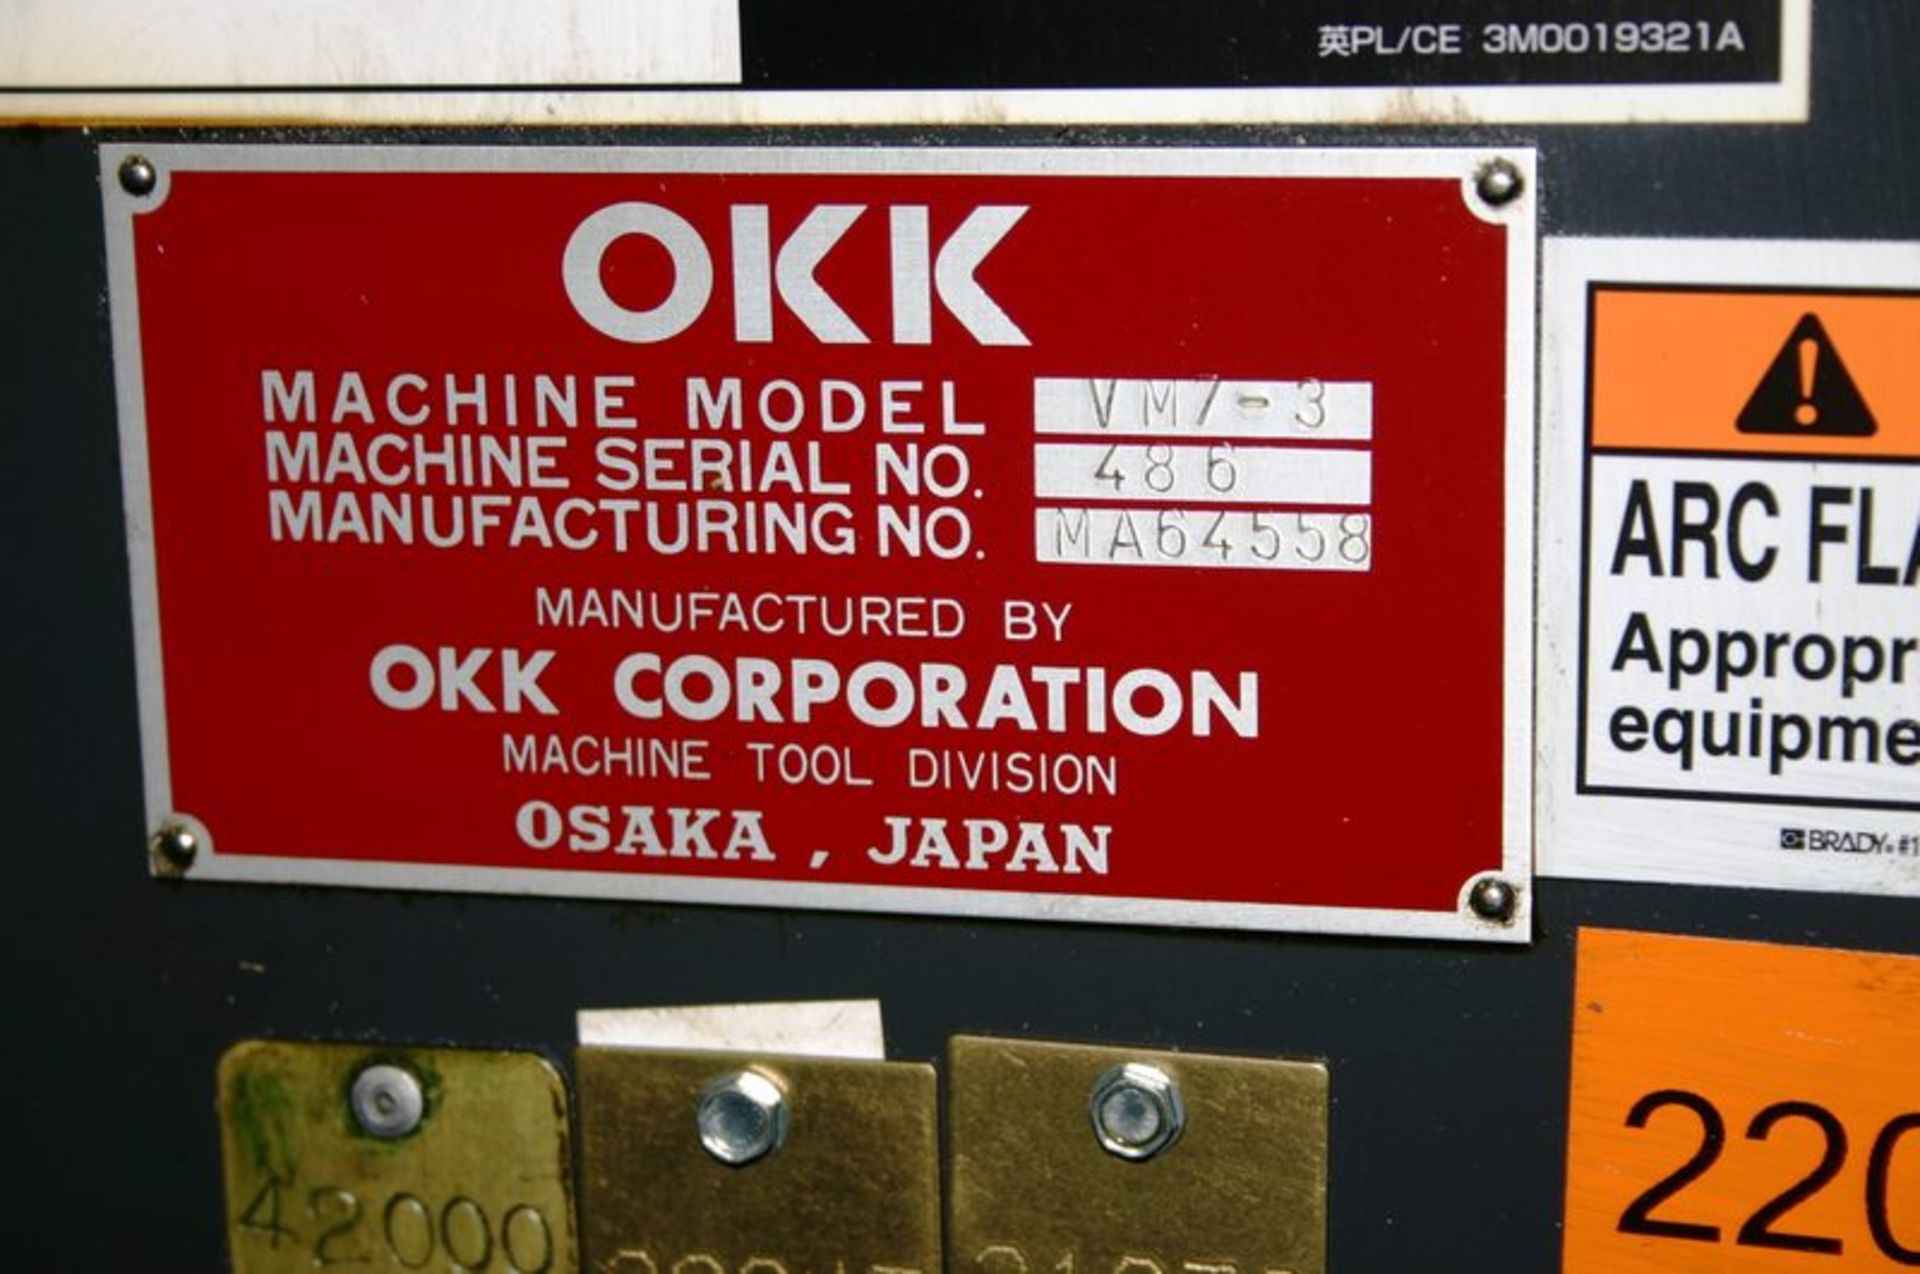 OKK Model VM7-III CNC 3-Axis 50 Taper Vertical Machining Center, S/N 486, New 2004 - Image 8 of 8